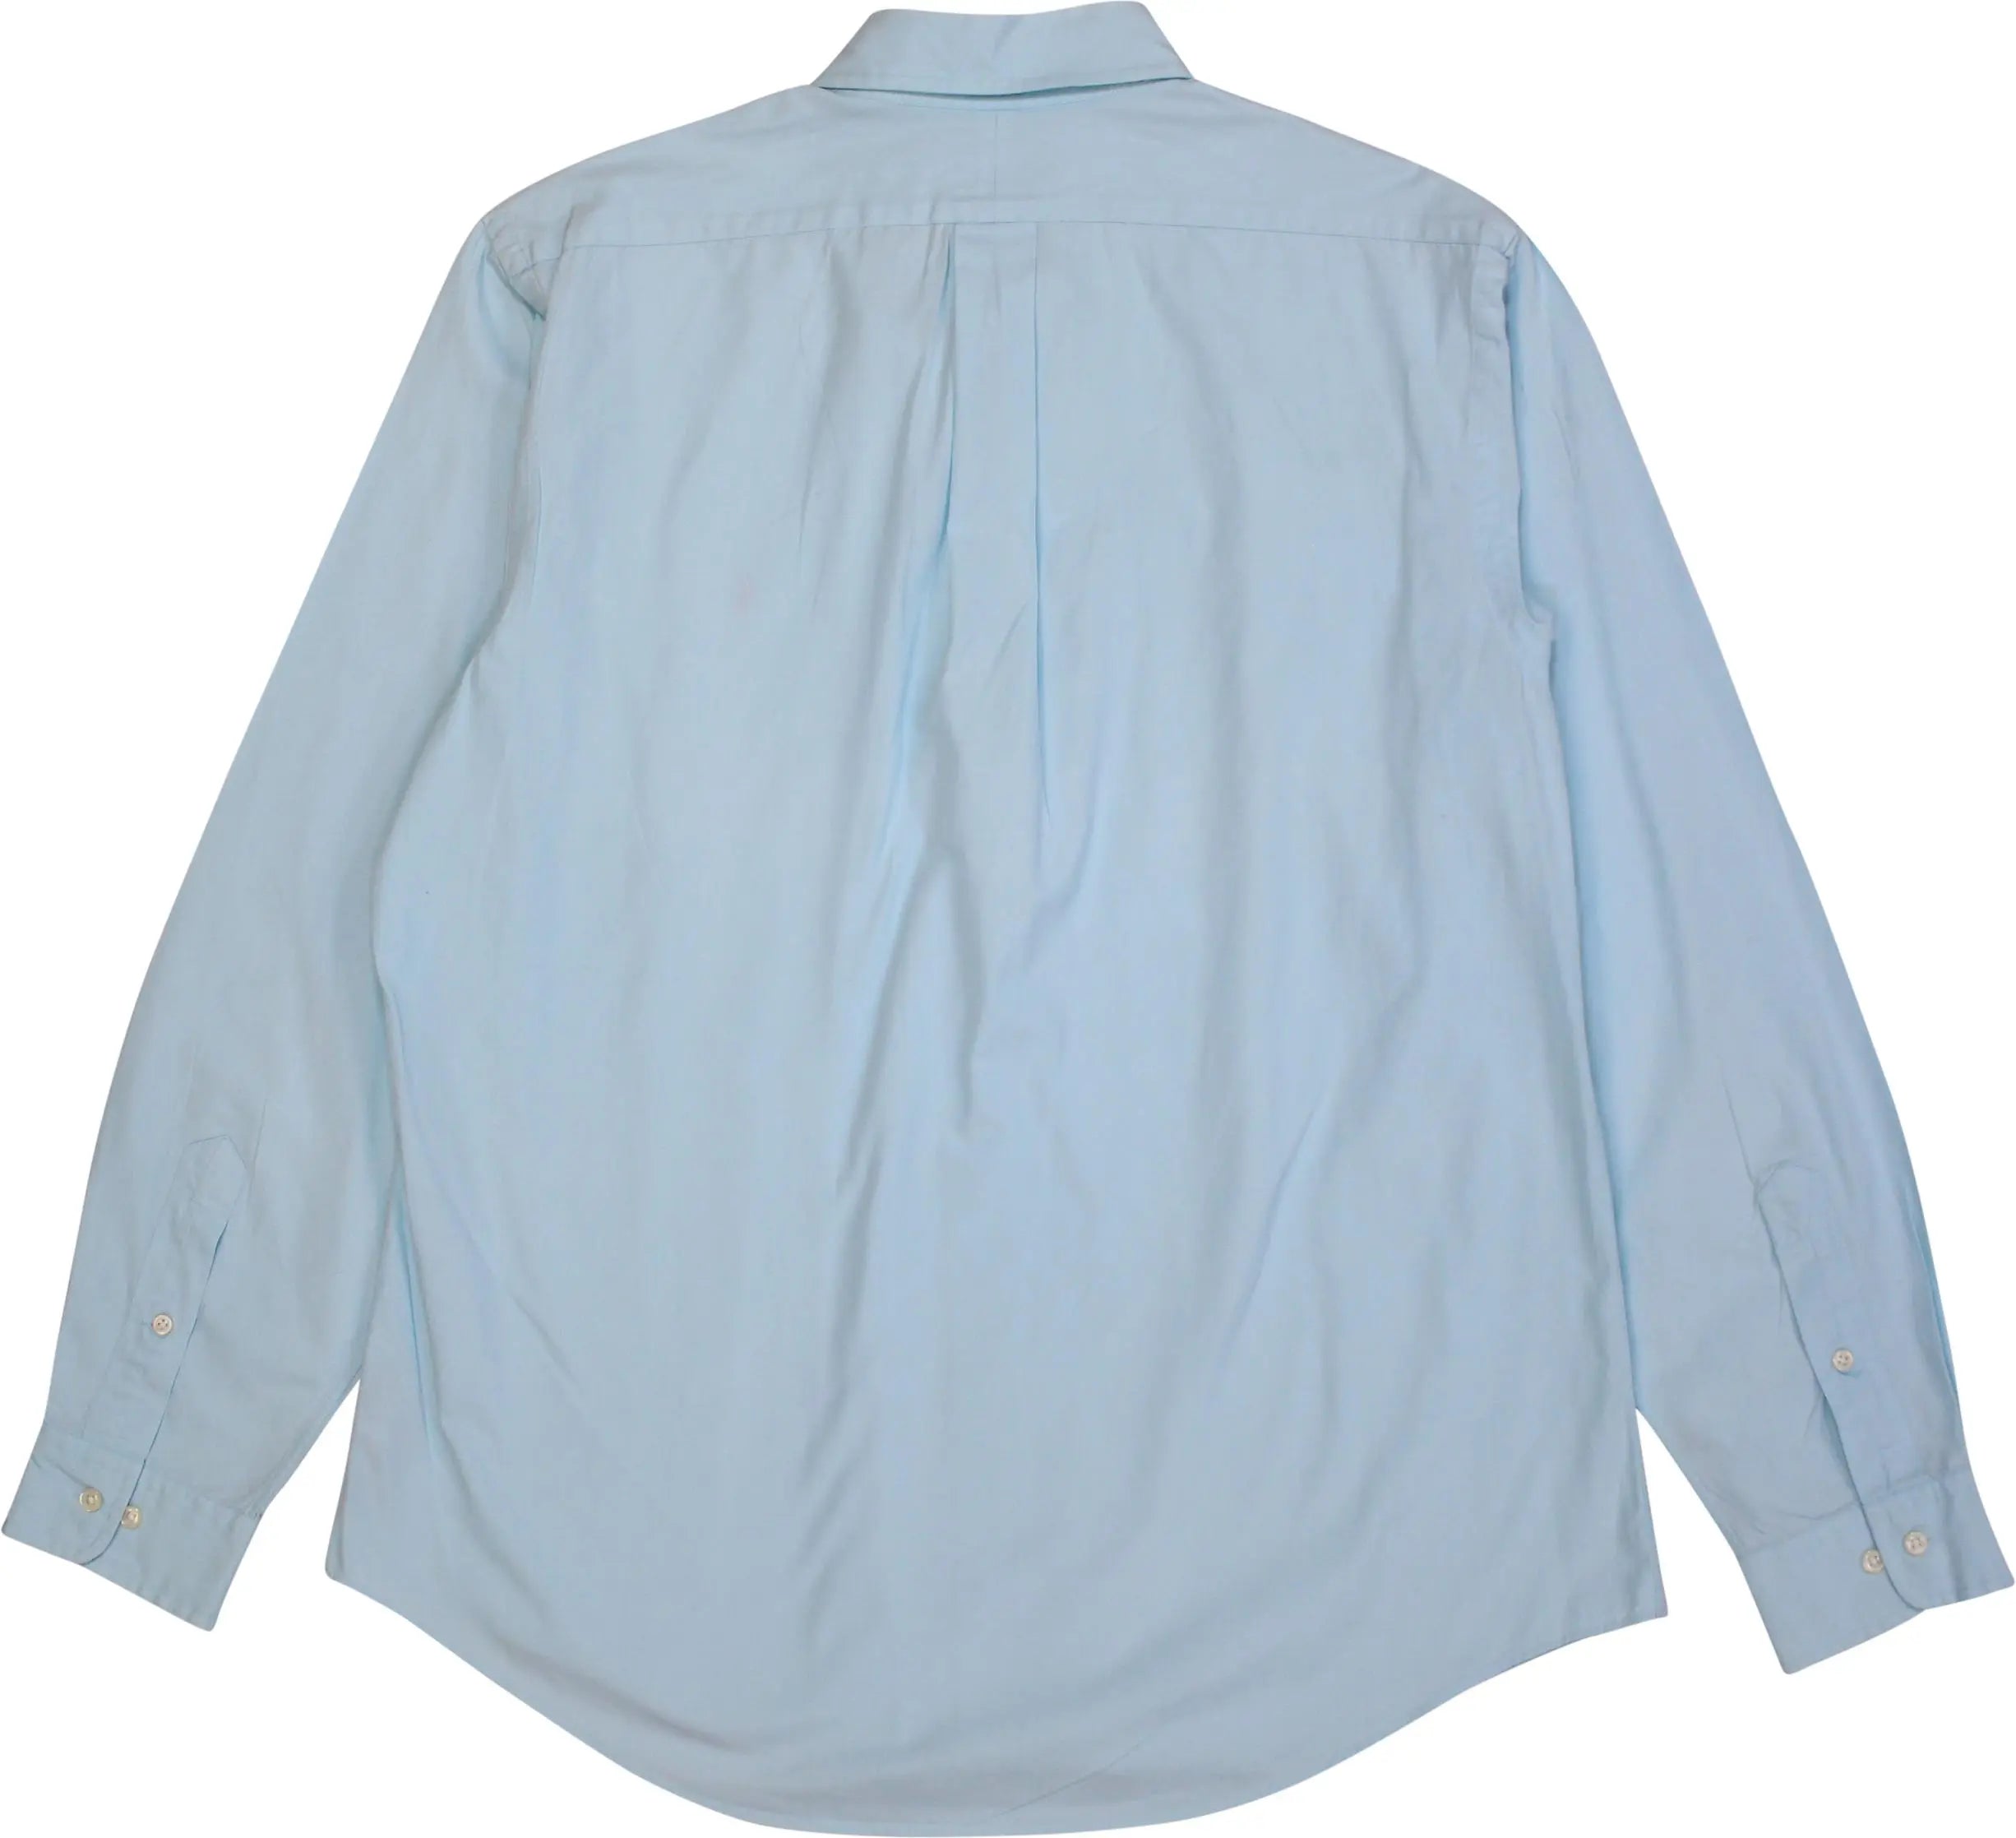 Ralph Lauren - Blue Long Sleeve Shirt by Ralph Lauren- ThriftTale.com - Vintage and second handclothing